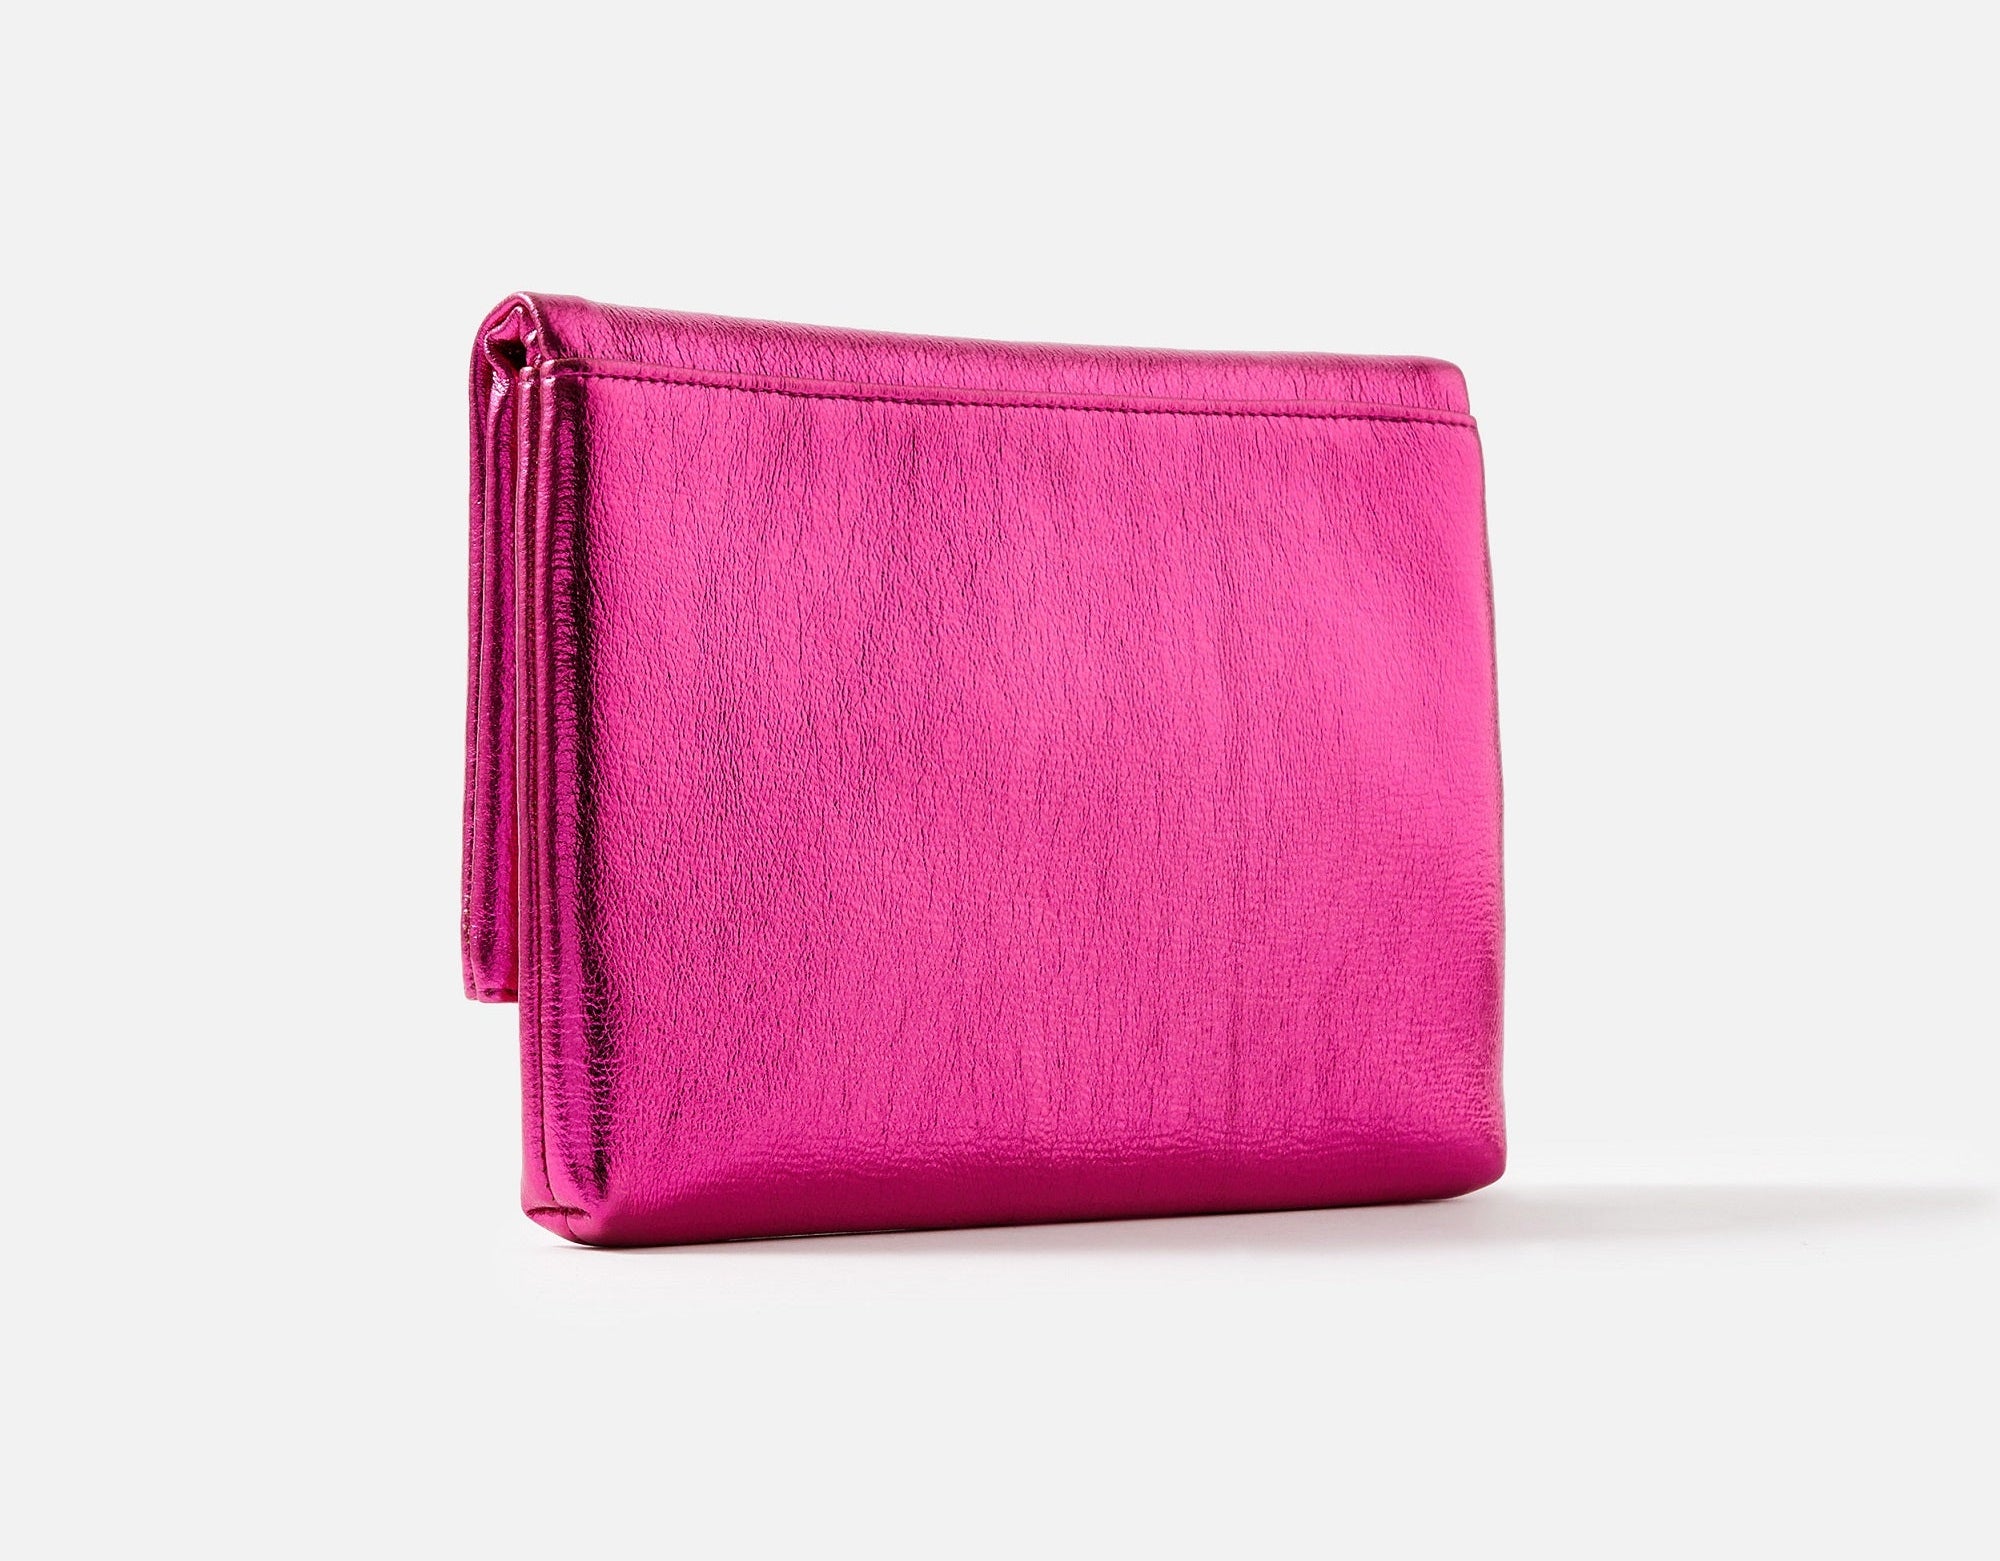 Accessorize London Foldover Clutch Bag Pink